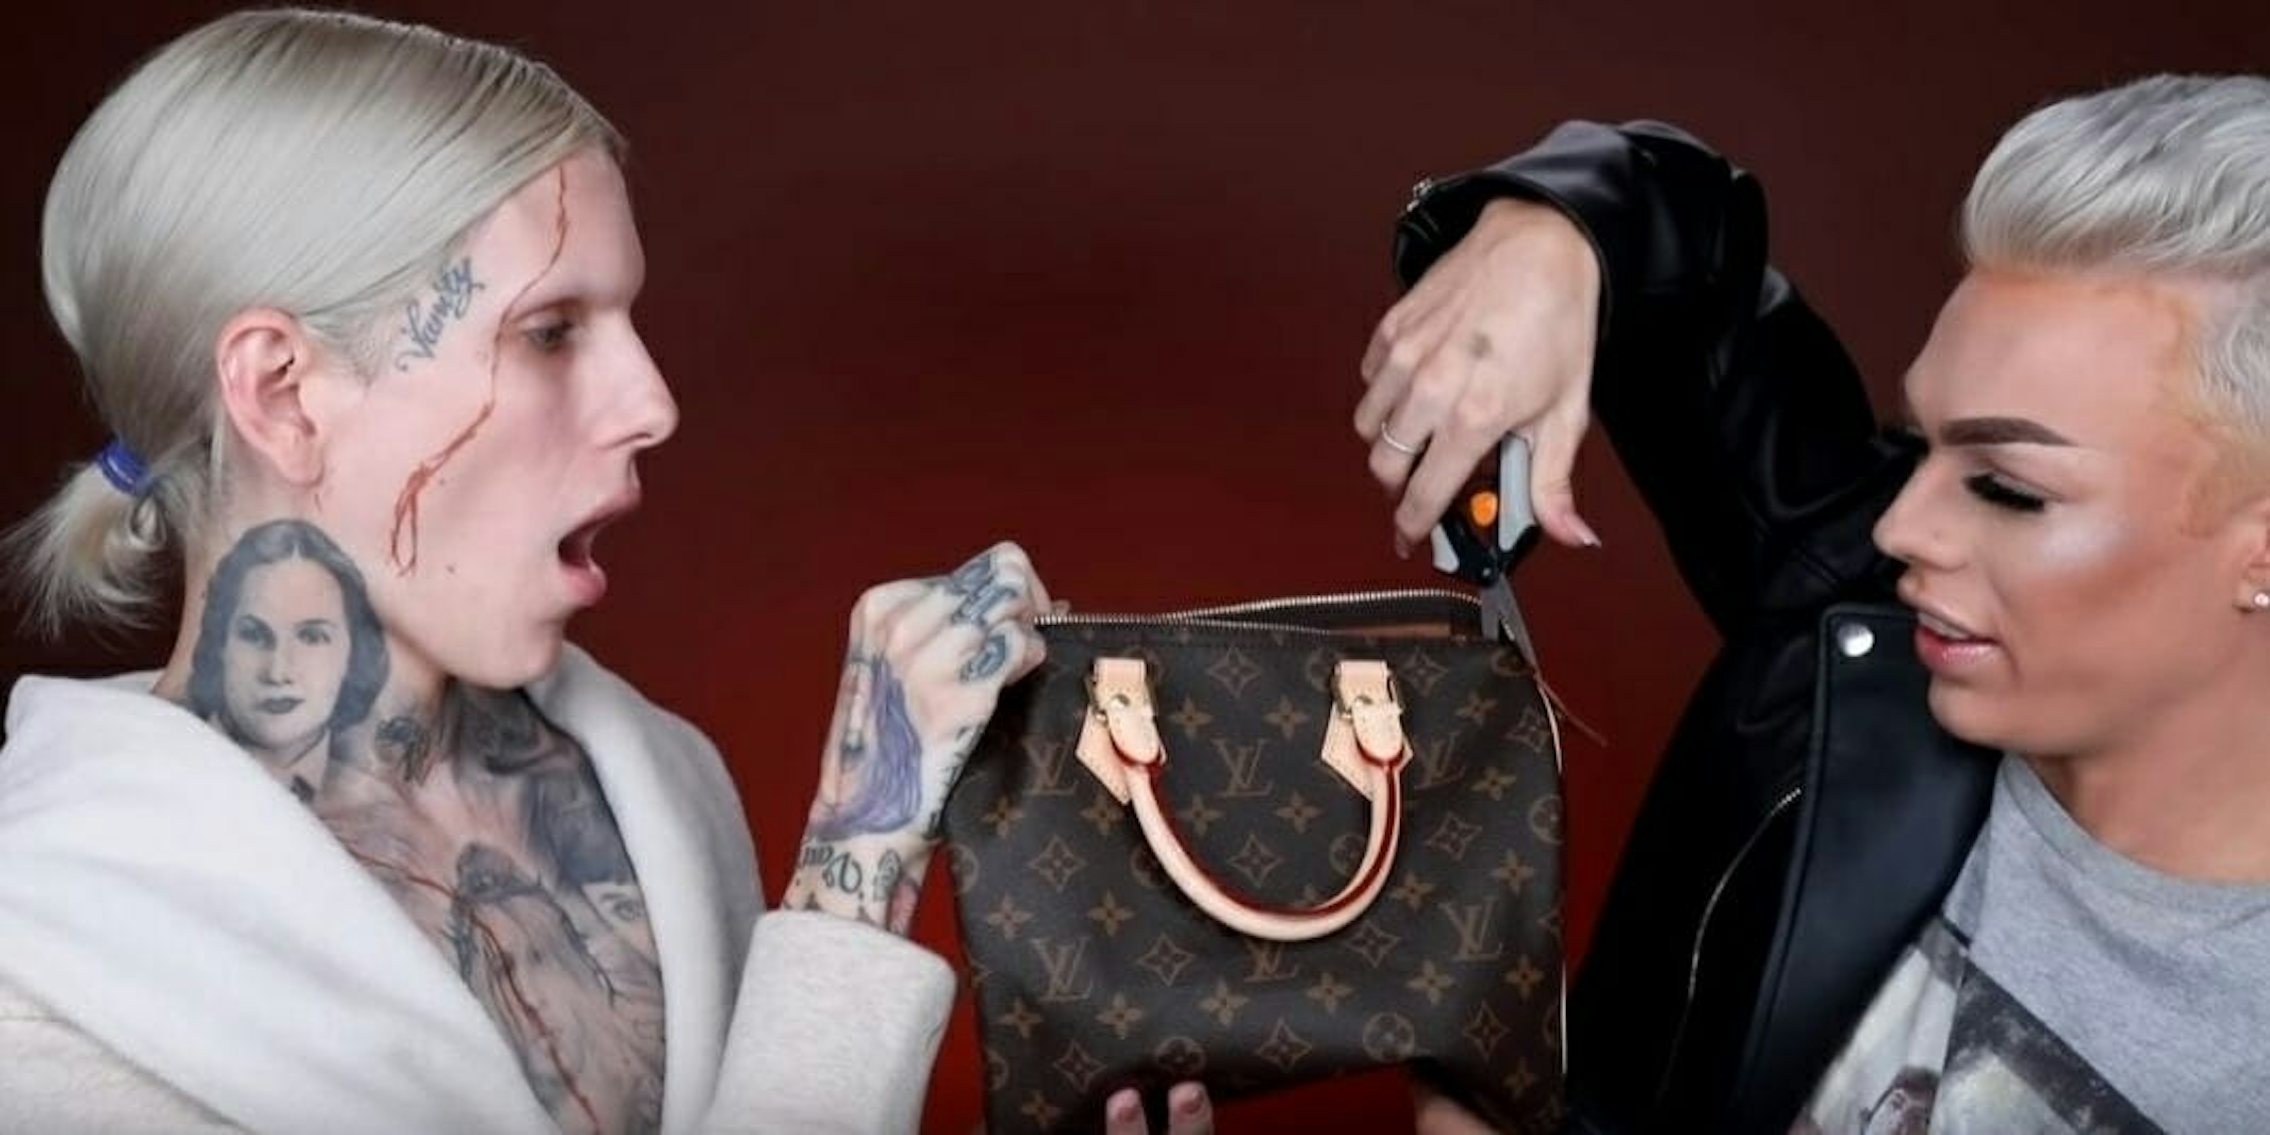 Video: Jeffree Star Destroys Louis Vuitton Bag To Make a Halloween Costume